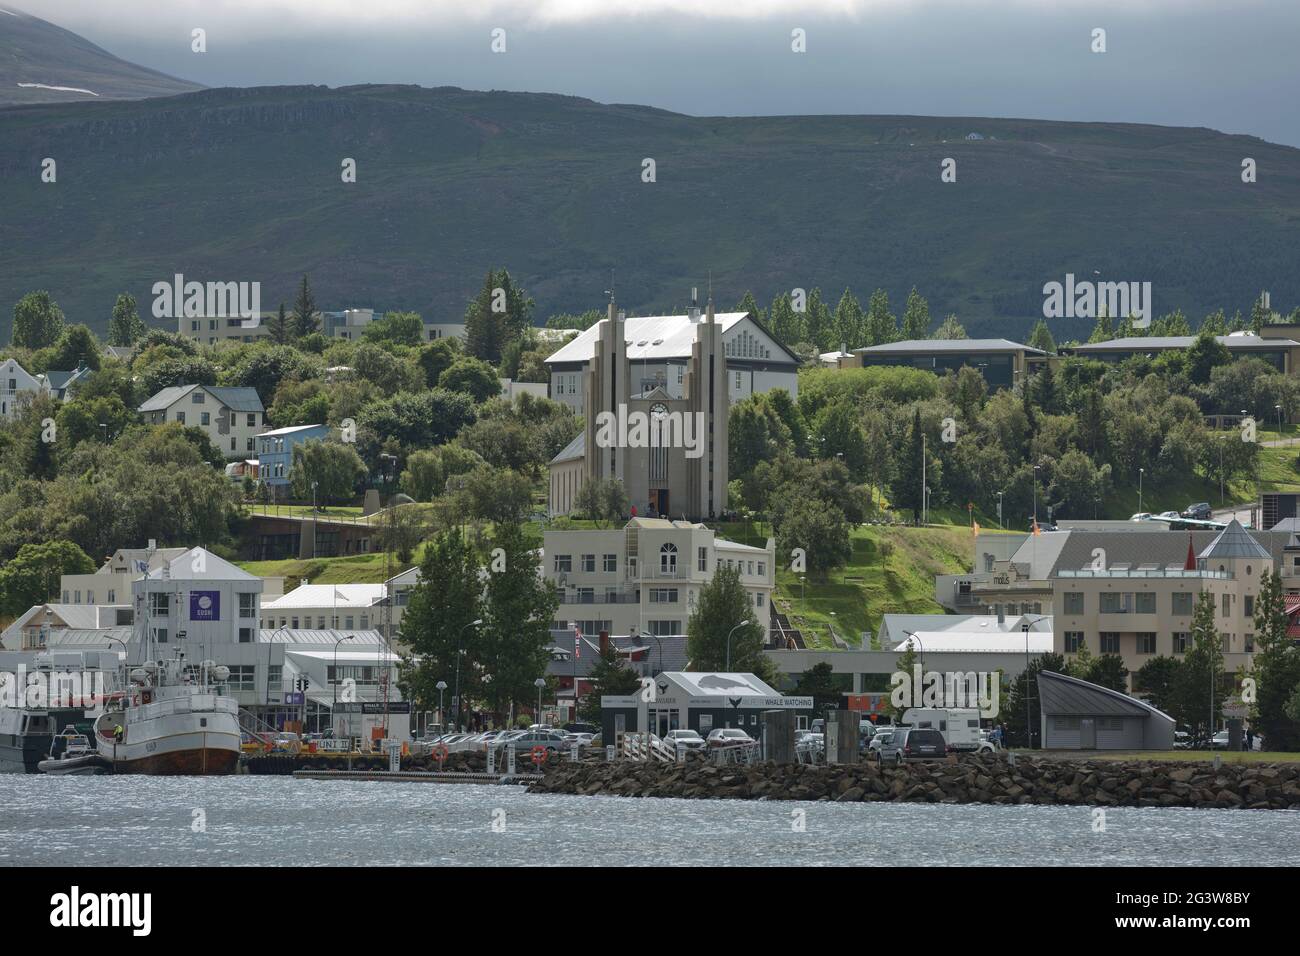 View of a city center and Akureyrarkirkja church in Akureyri in Iceland Stock Photo